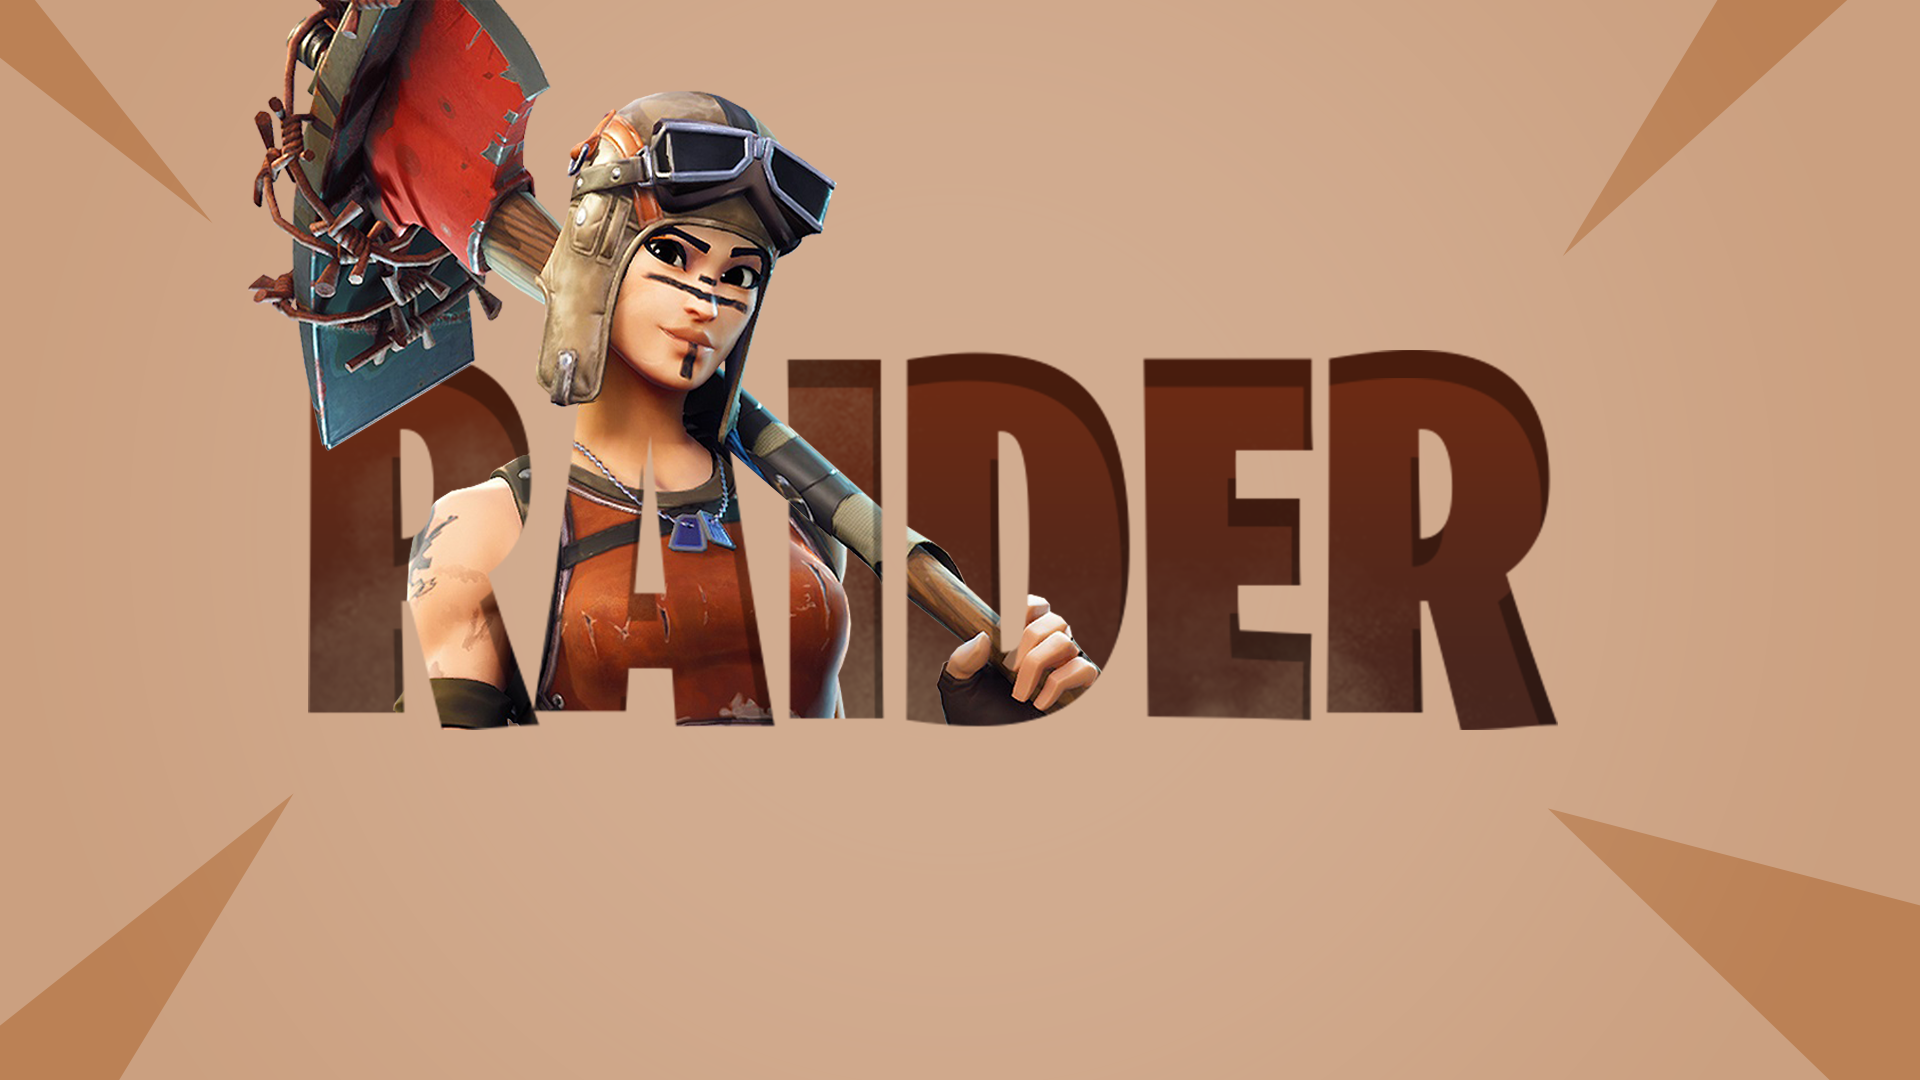 Renegade Raider Wallpaper Free .wallpaperaccess.com